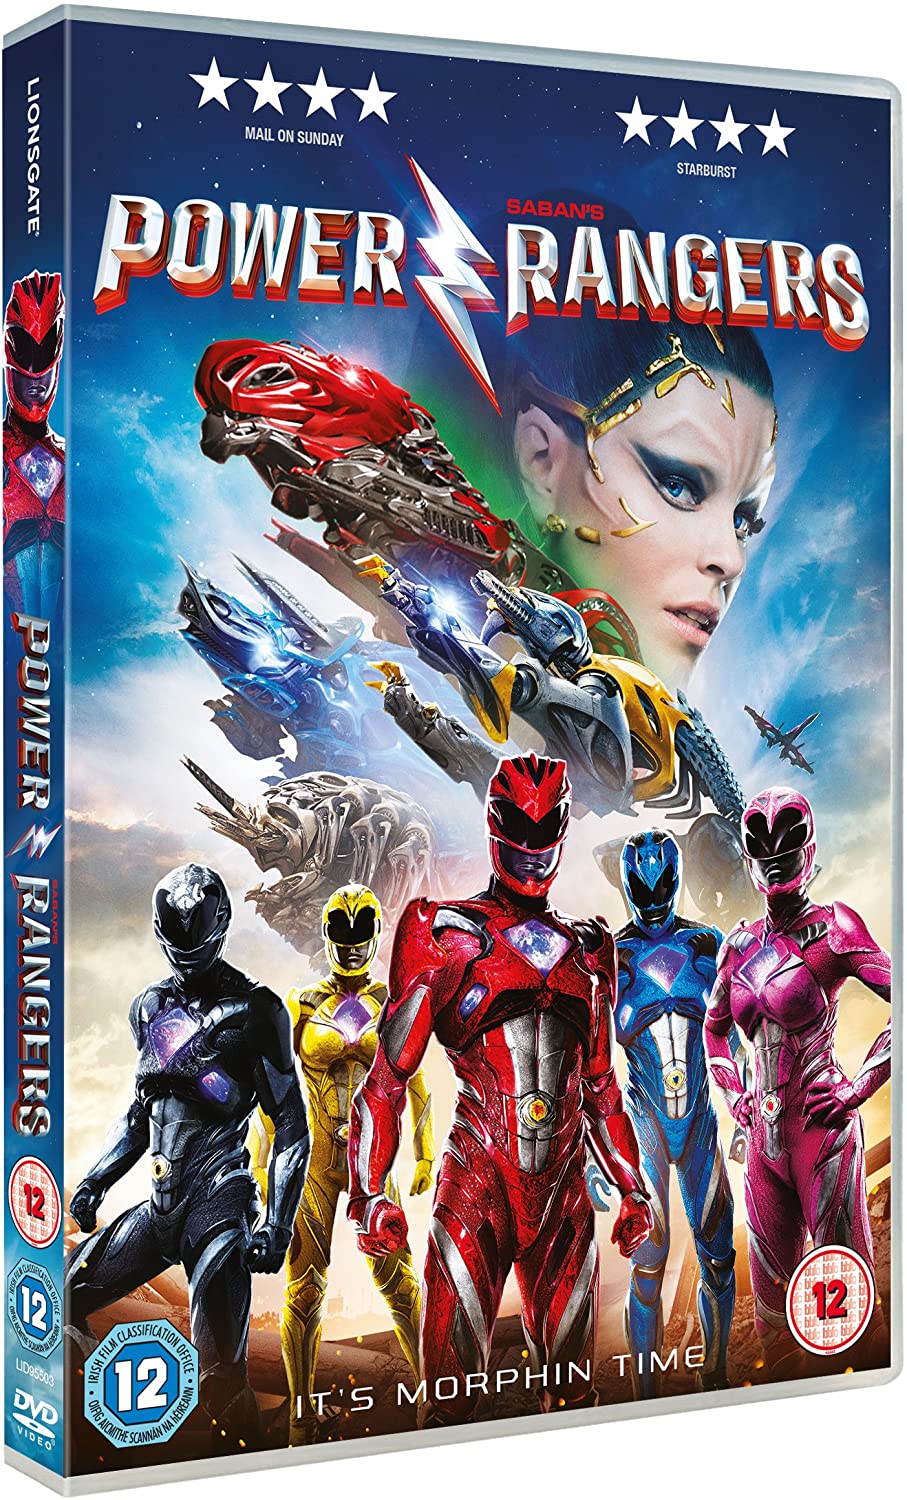 Power Rangers [DVD] [2017]